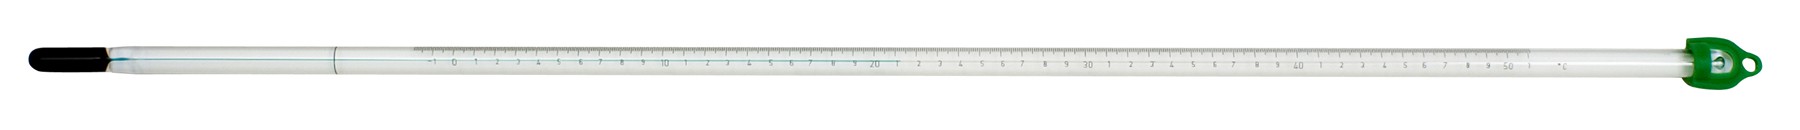 H-B DURAC Plus Precision Liquid-In-Glass Thermometer; -1 to 51C, 76mm Immersion, Organic Liquid Fill